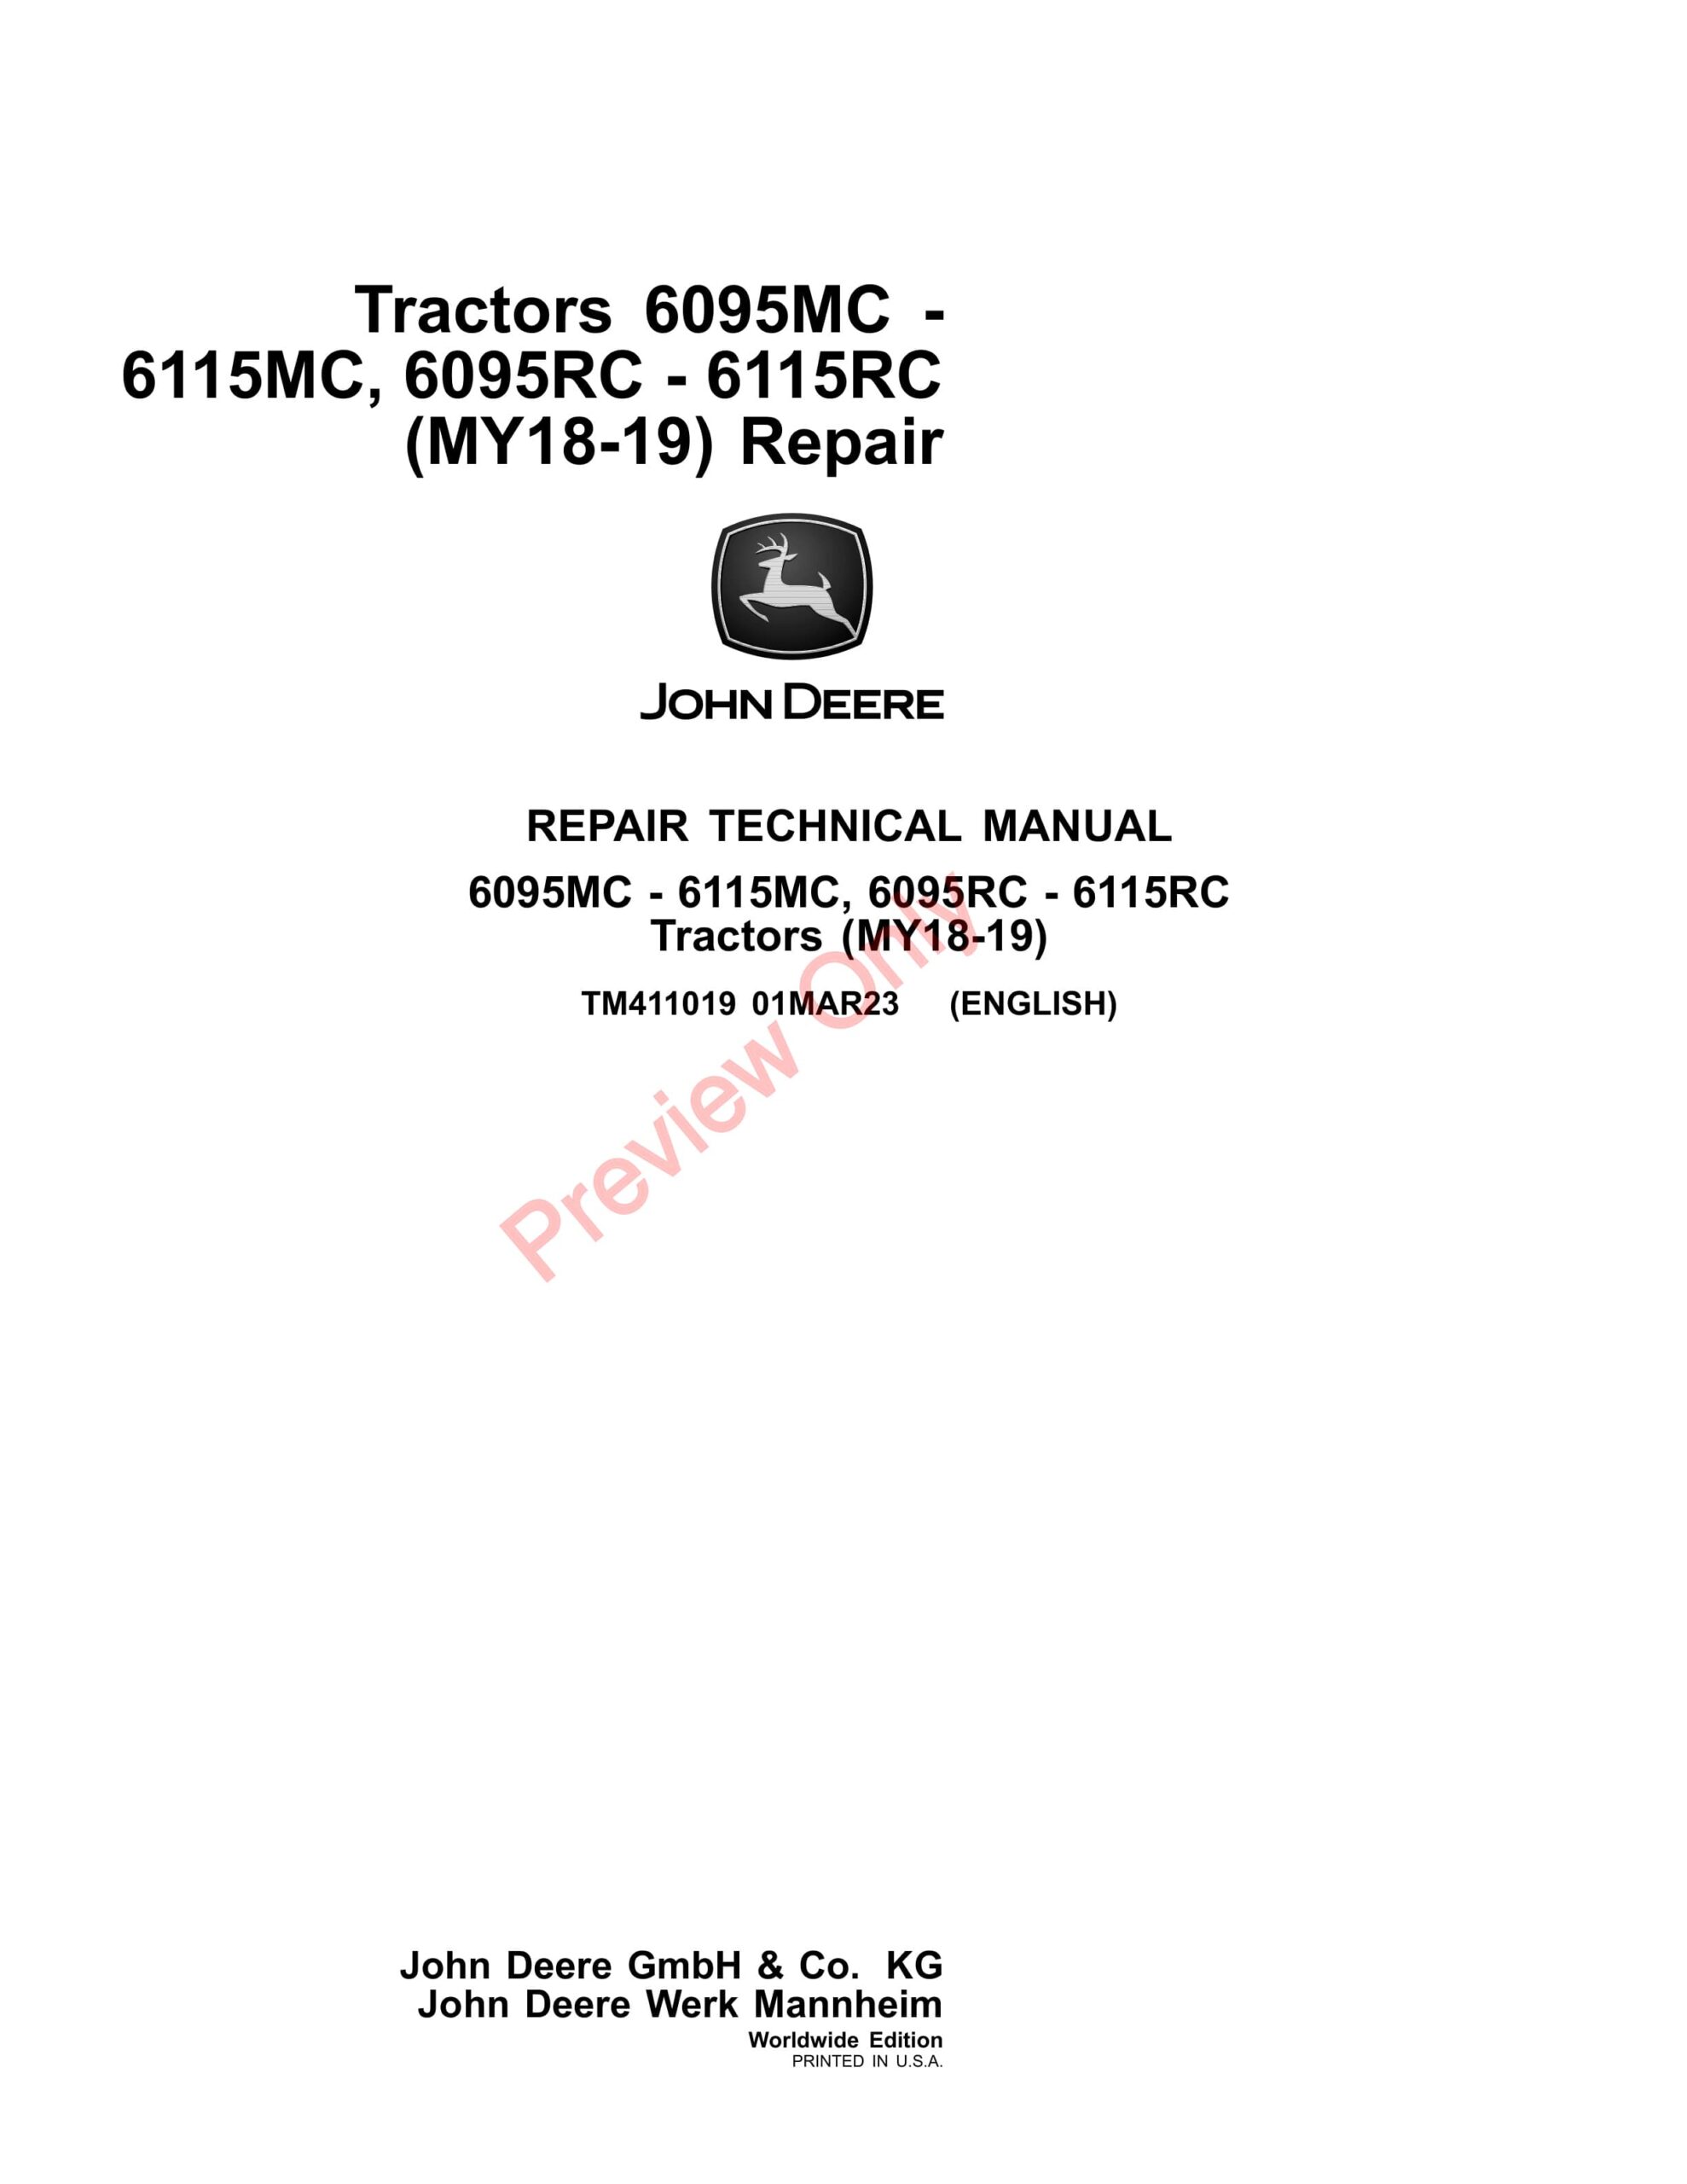 John Deere Tractors 6095MC – 6115MC, 6095RC – 6115RC (MY18-19) Repair Technical Manual TM411019 01MAR23-1